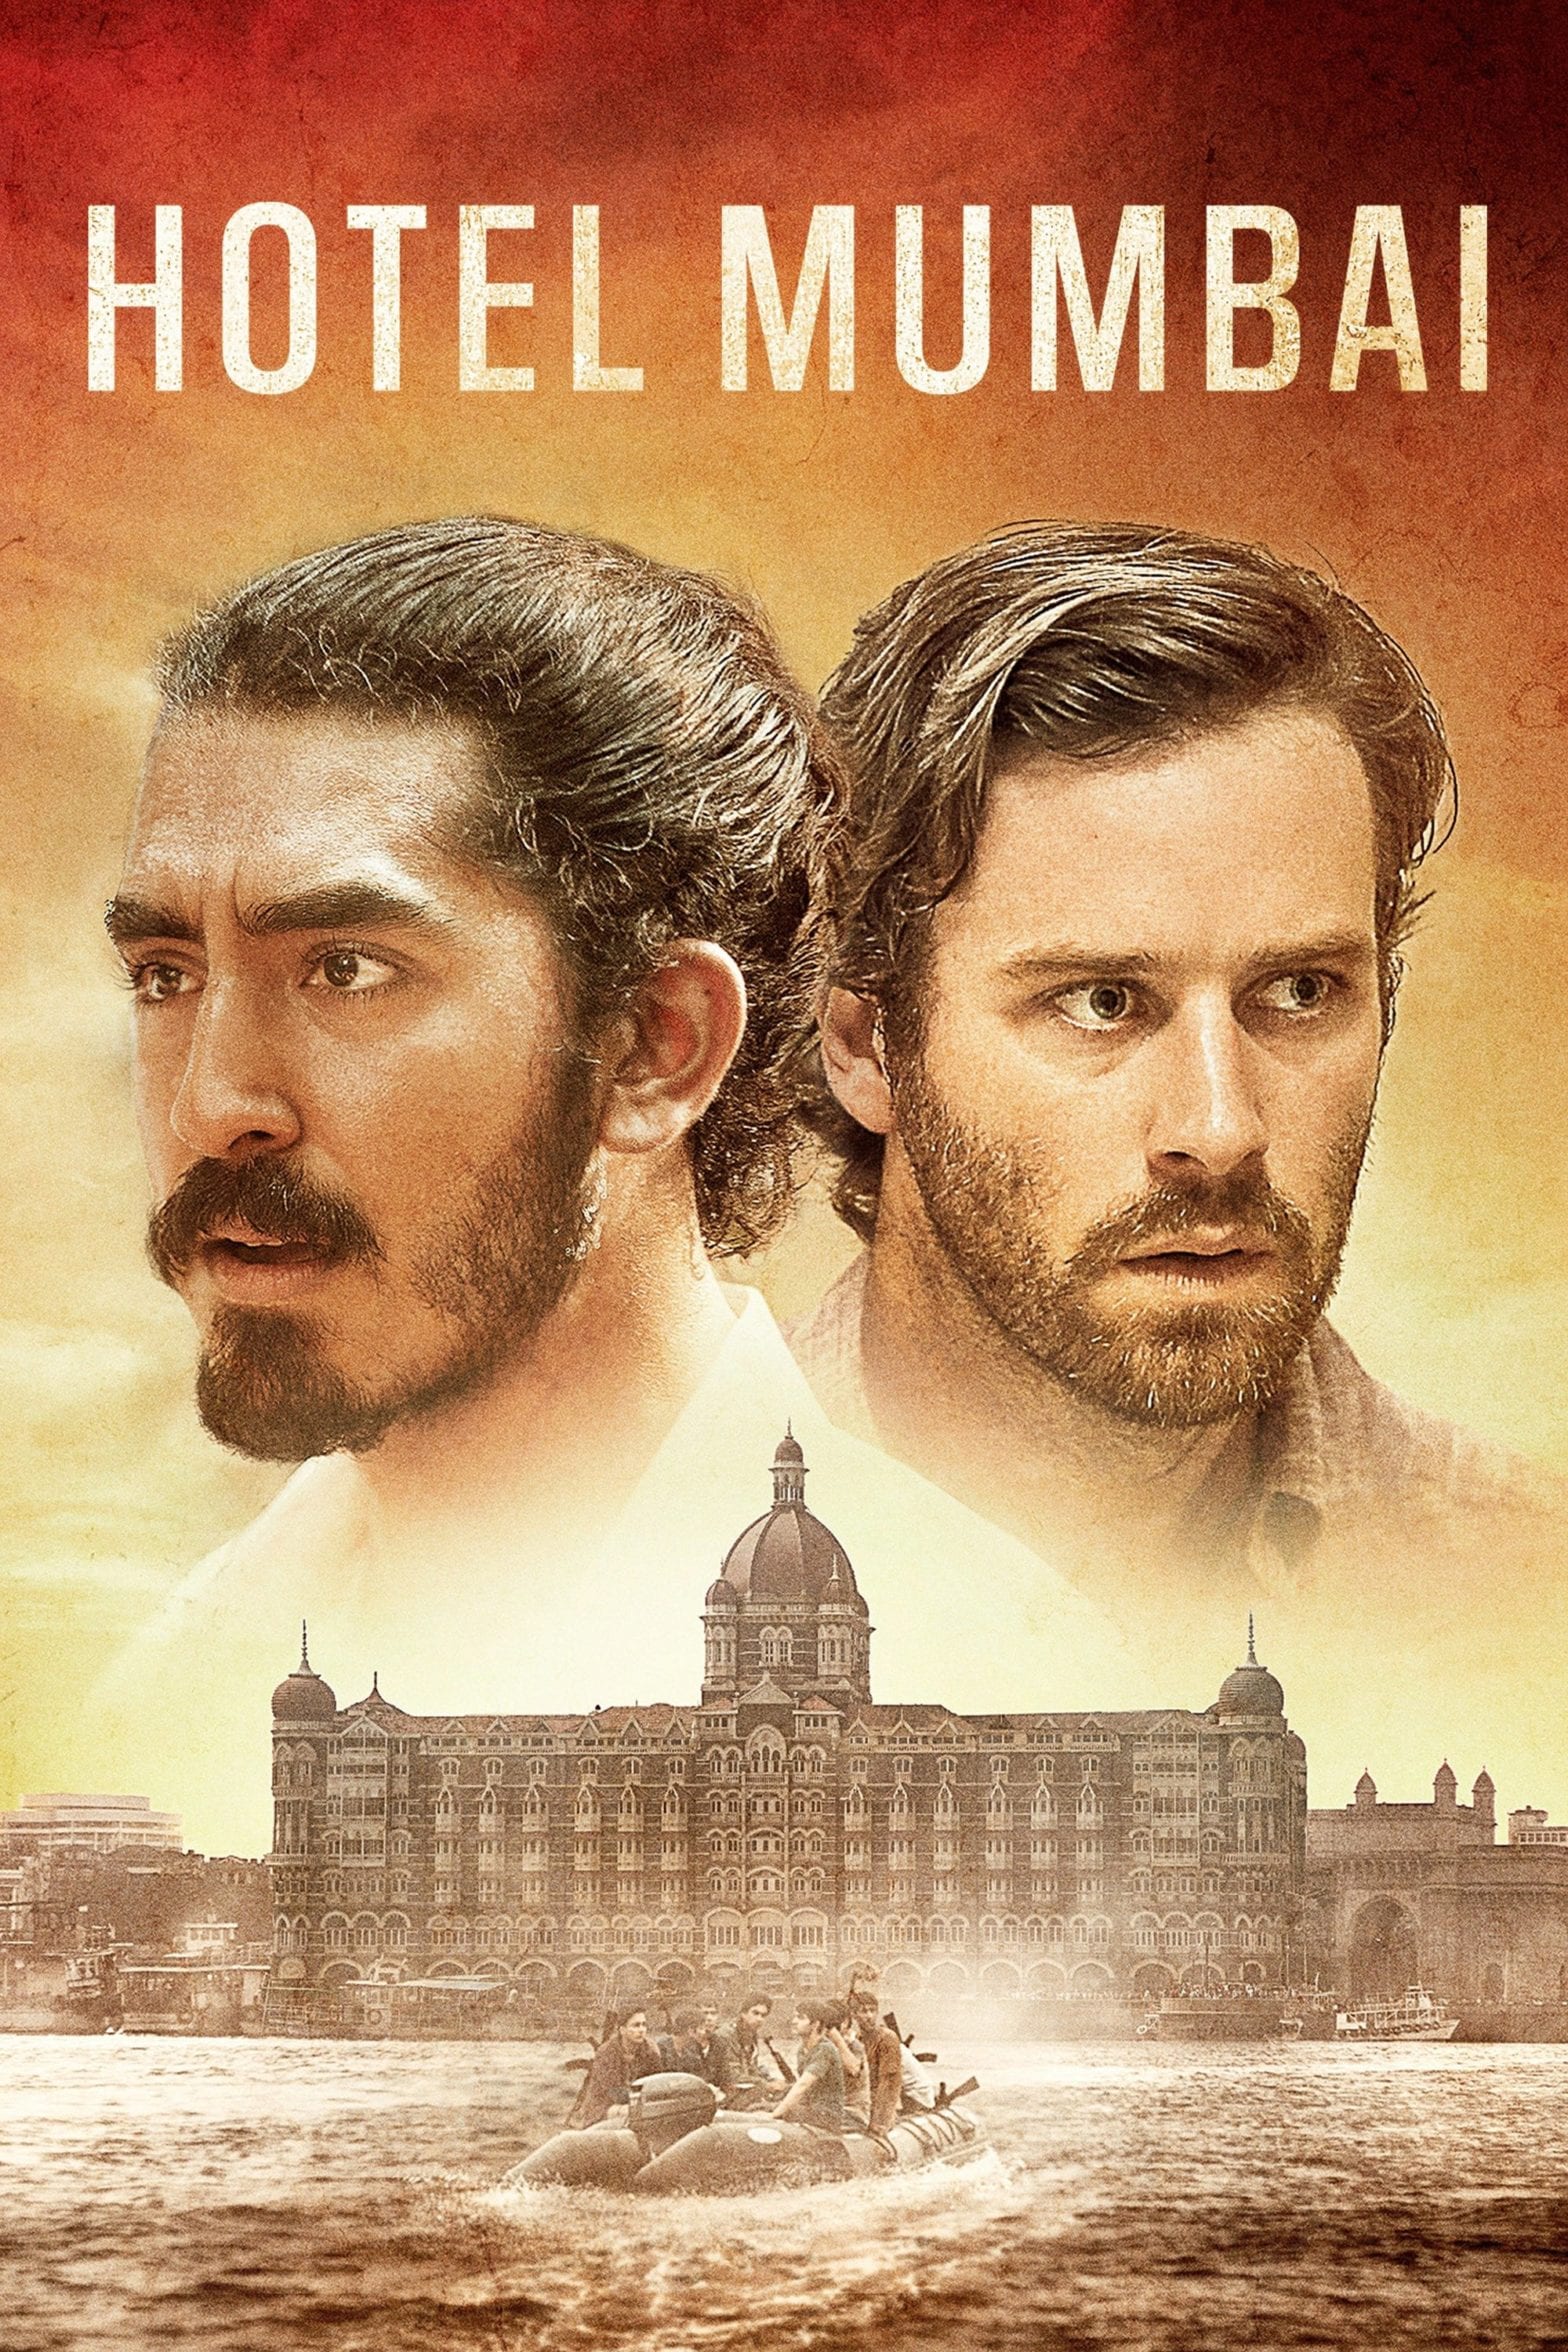 Poster for the movie "Hotel Mumbai"